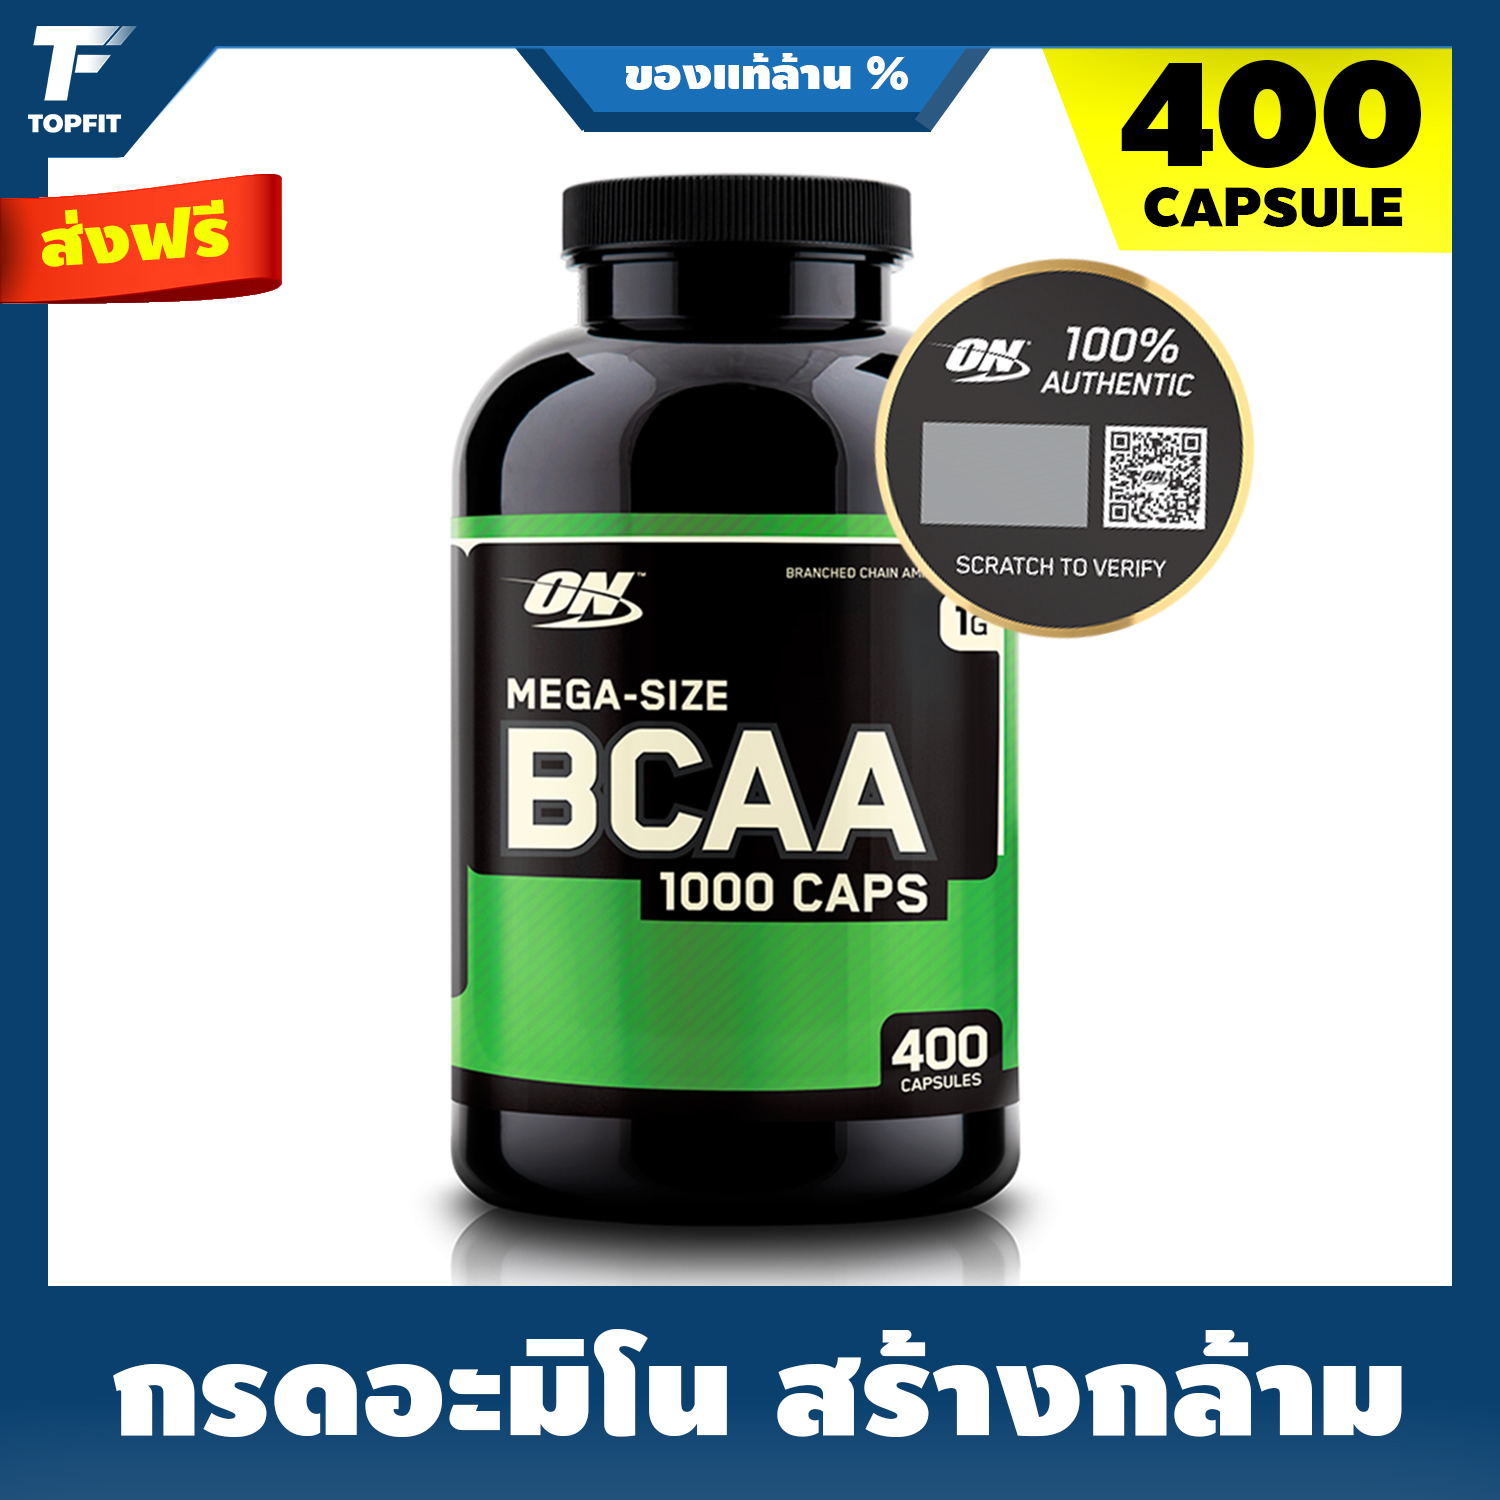 Optimum Nutrition BCAA 1000 Caps (400 CAPSULE) กรดอะมิโนเสริมสร้างกล้ามเนื้อ